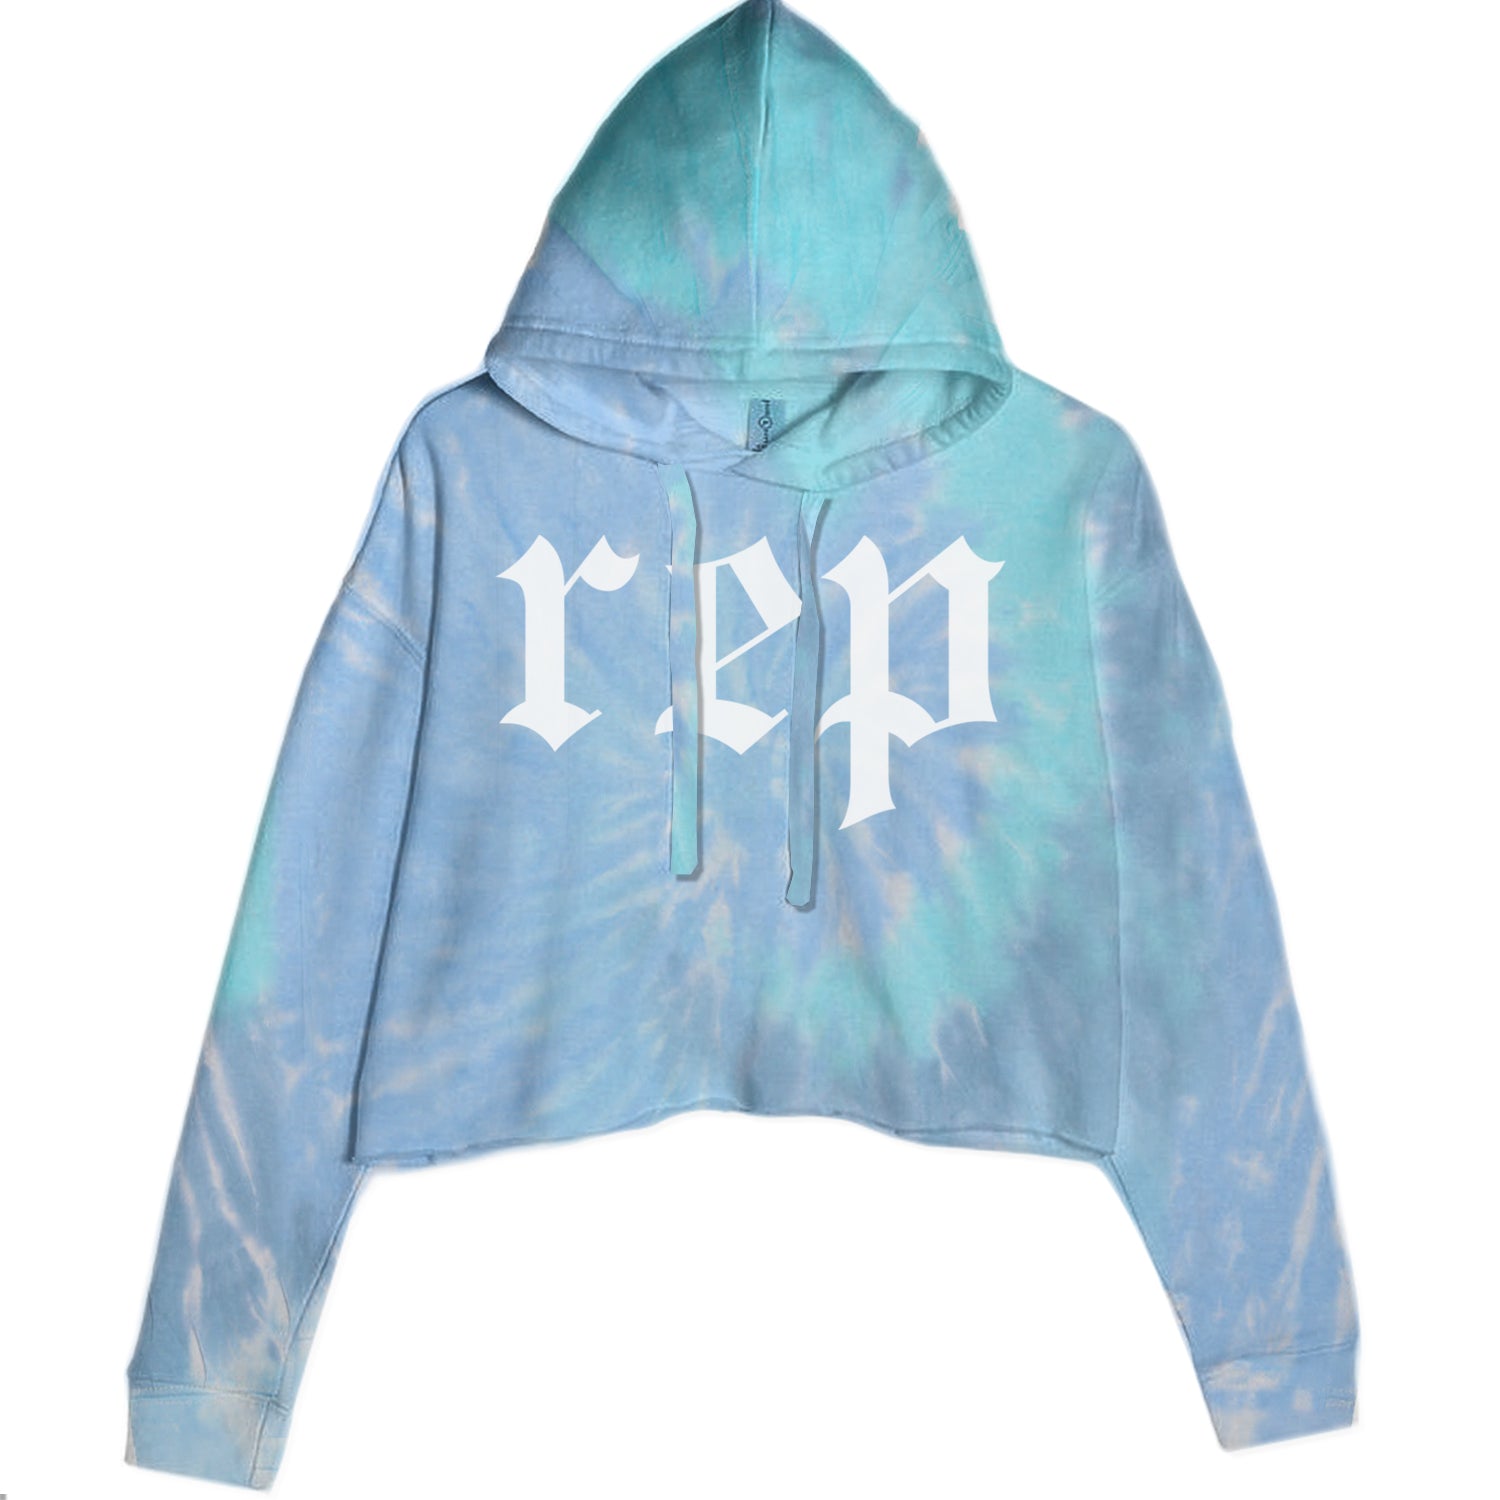 REP Reputation Eras Music Lover Gift Fan Favorite Cropped Hoodie Sweatshirt Blue Clouds